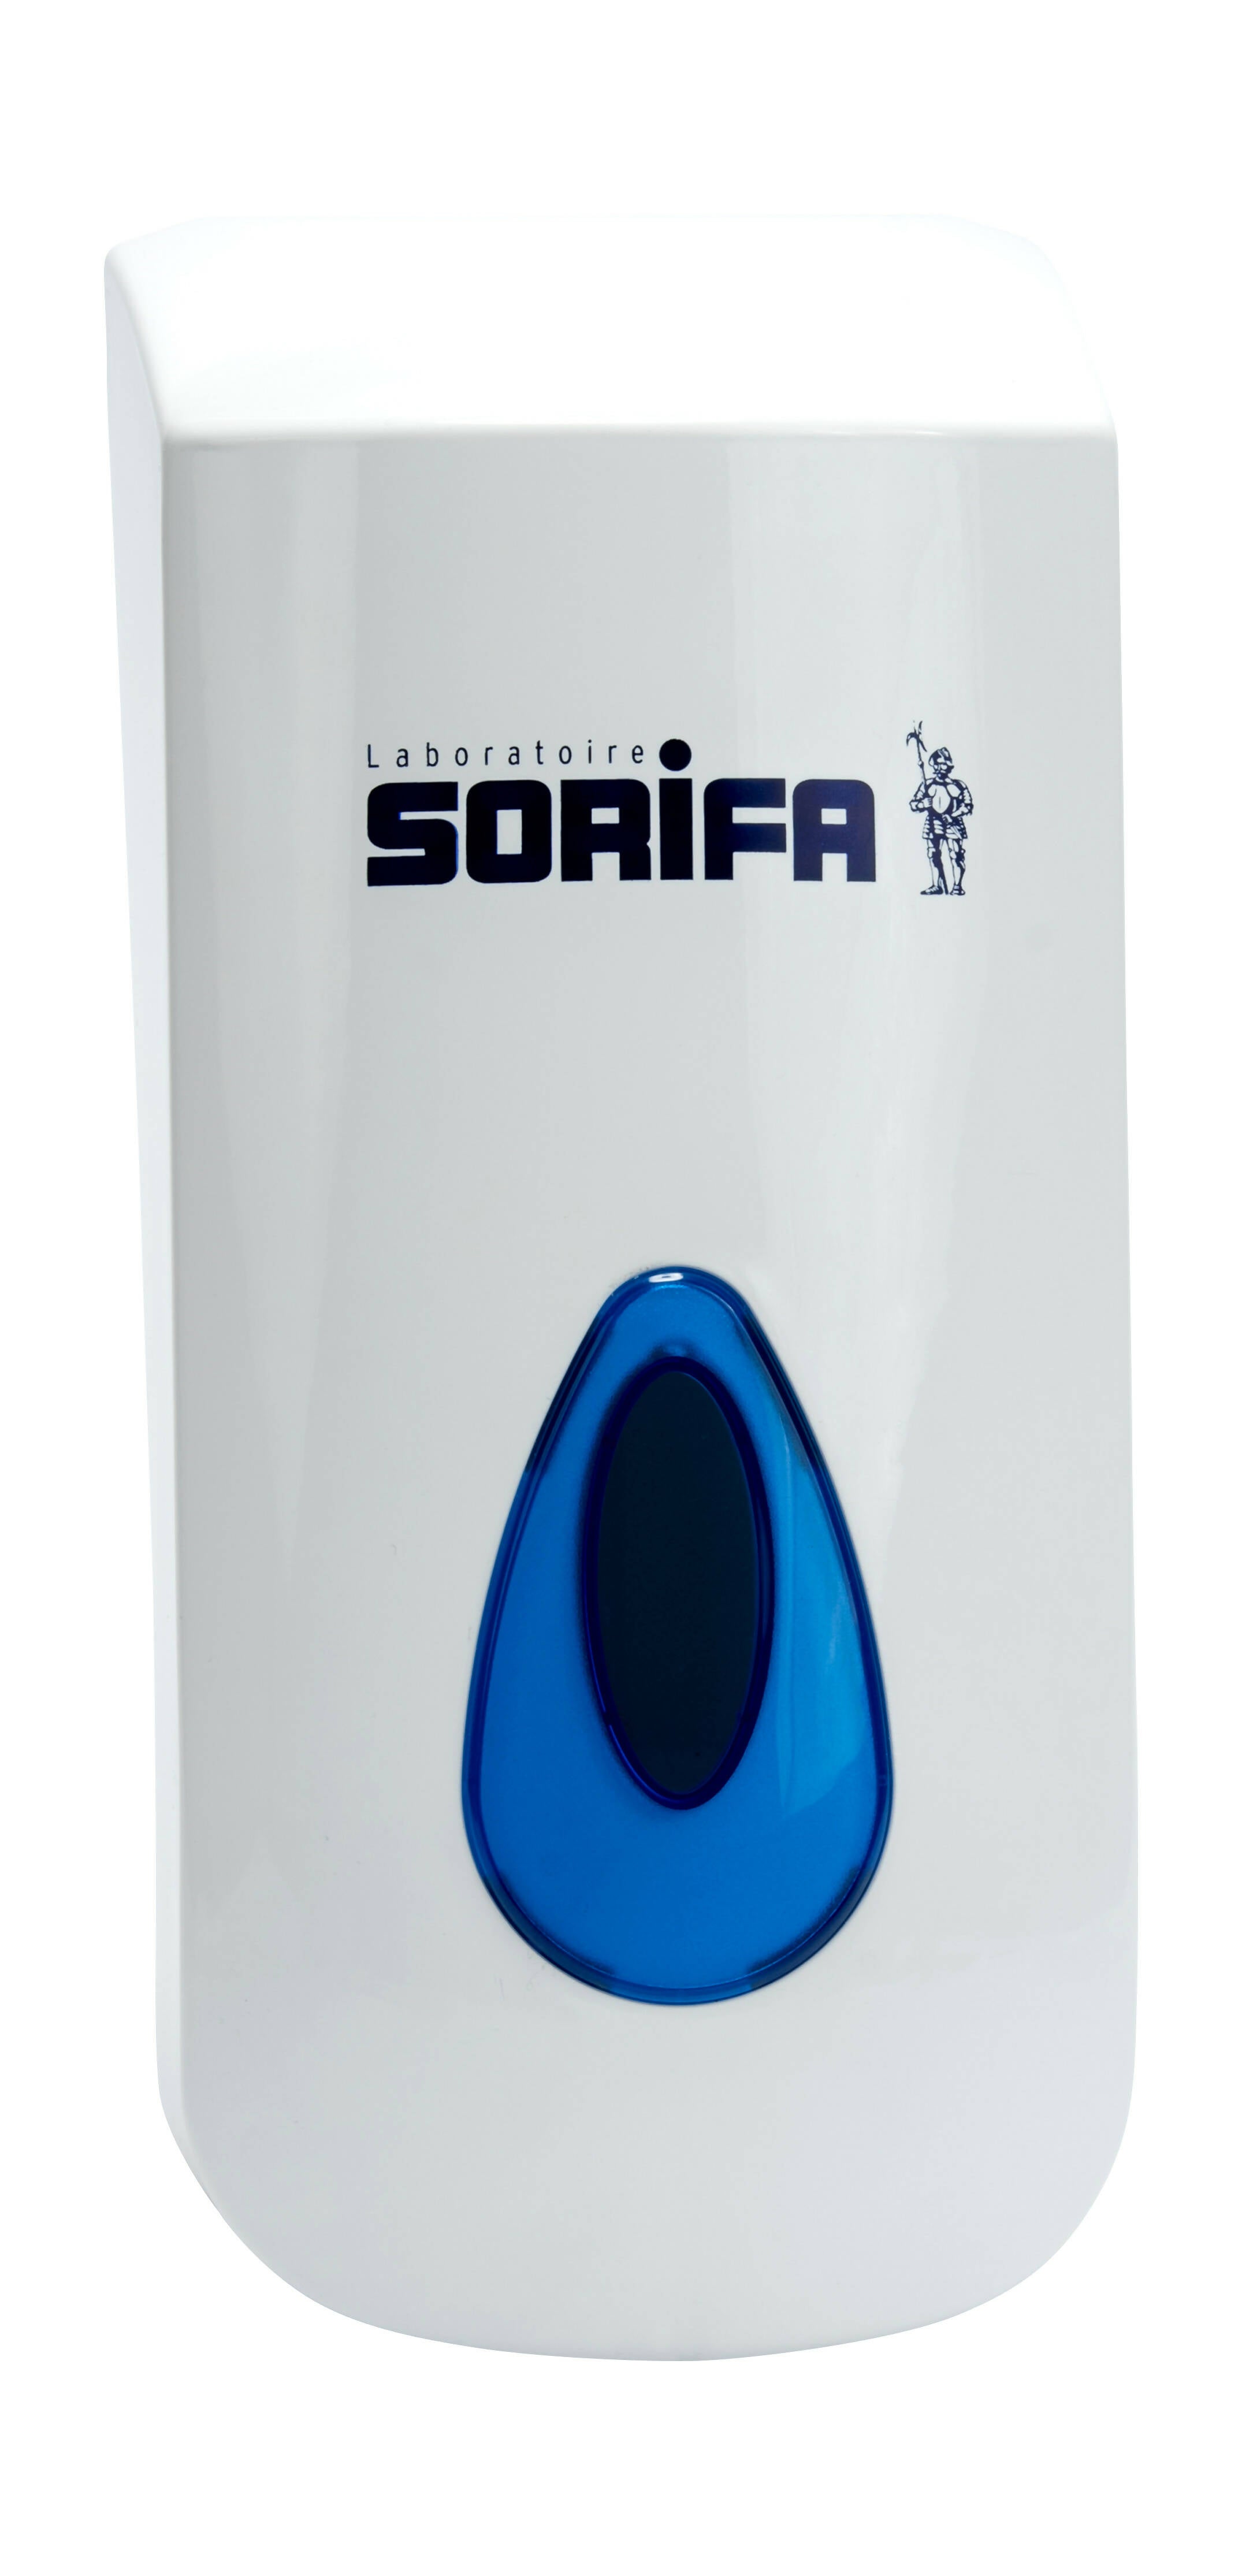 SORIFA - Robust, ergonomic, lockable metal wall dispenser for 1L SORIFA brand bottle - For gels and liquid soaps.